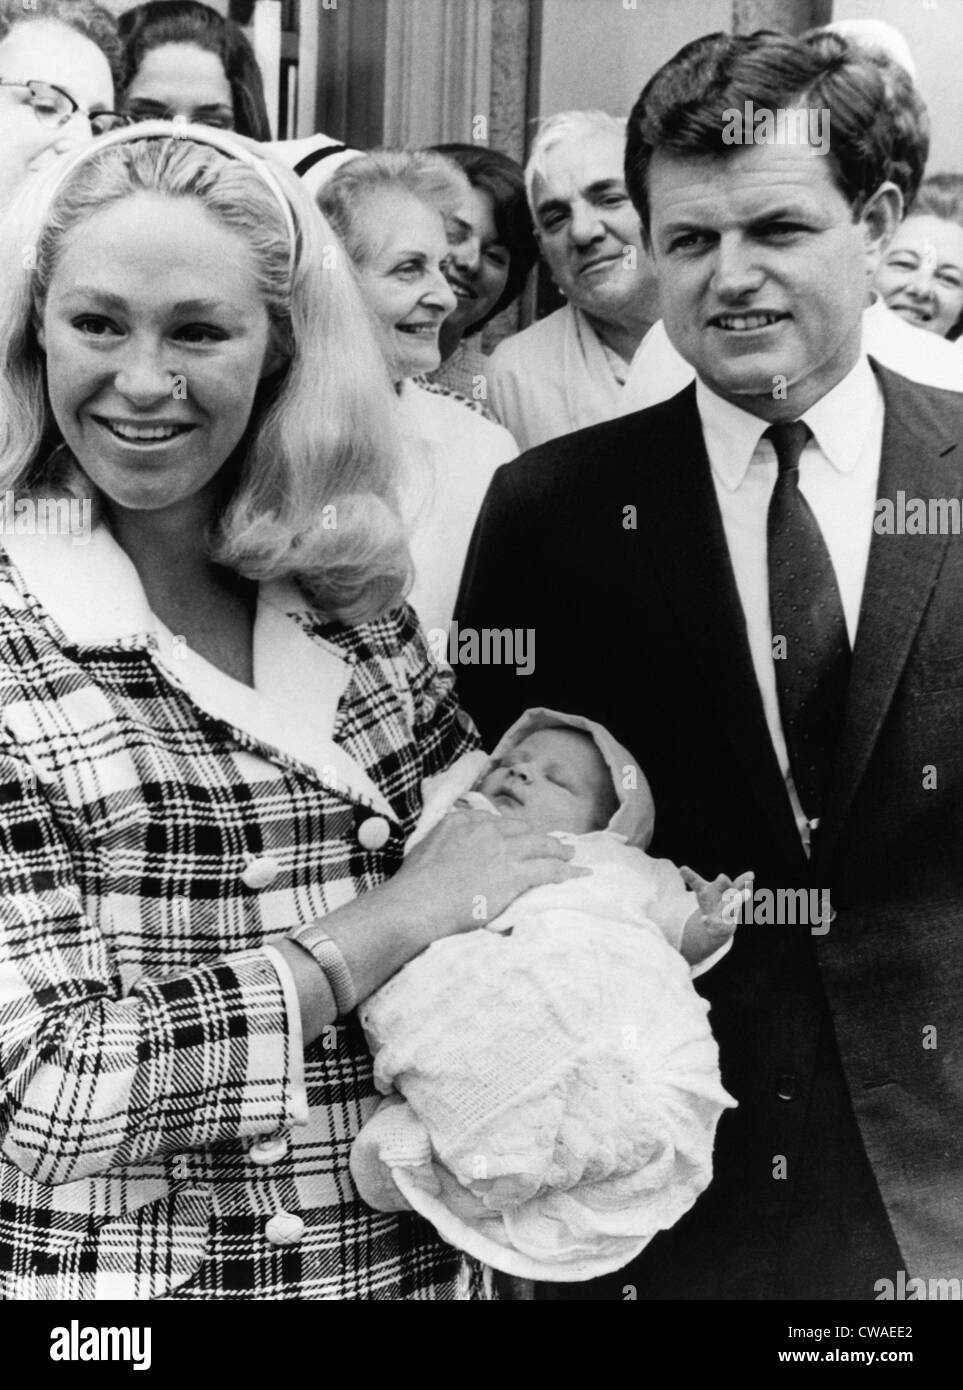 Senator Edward Kennedy and his wife, Joan Kennedy, with their baby son, Patrick Joseph Kennedy, St. Elizabeth's Hospital, Stock Photo